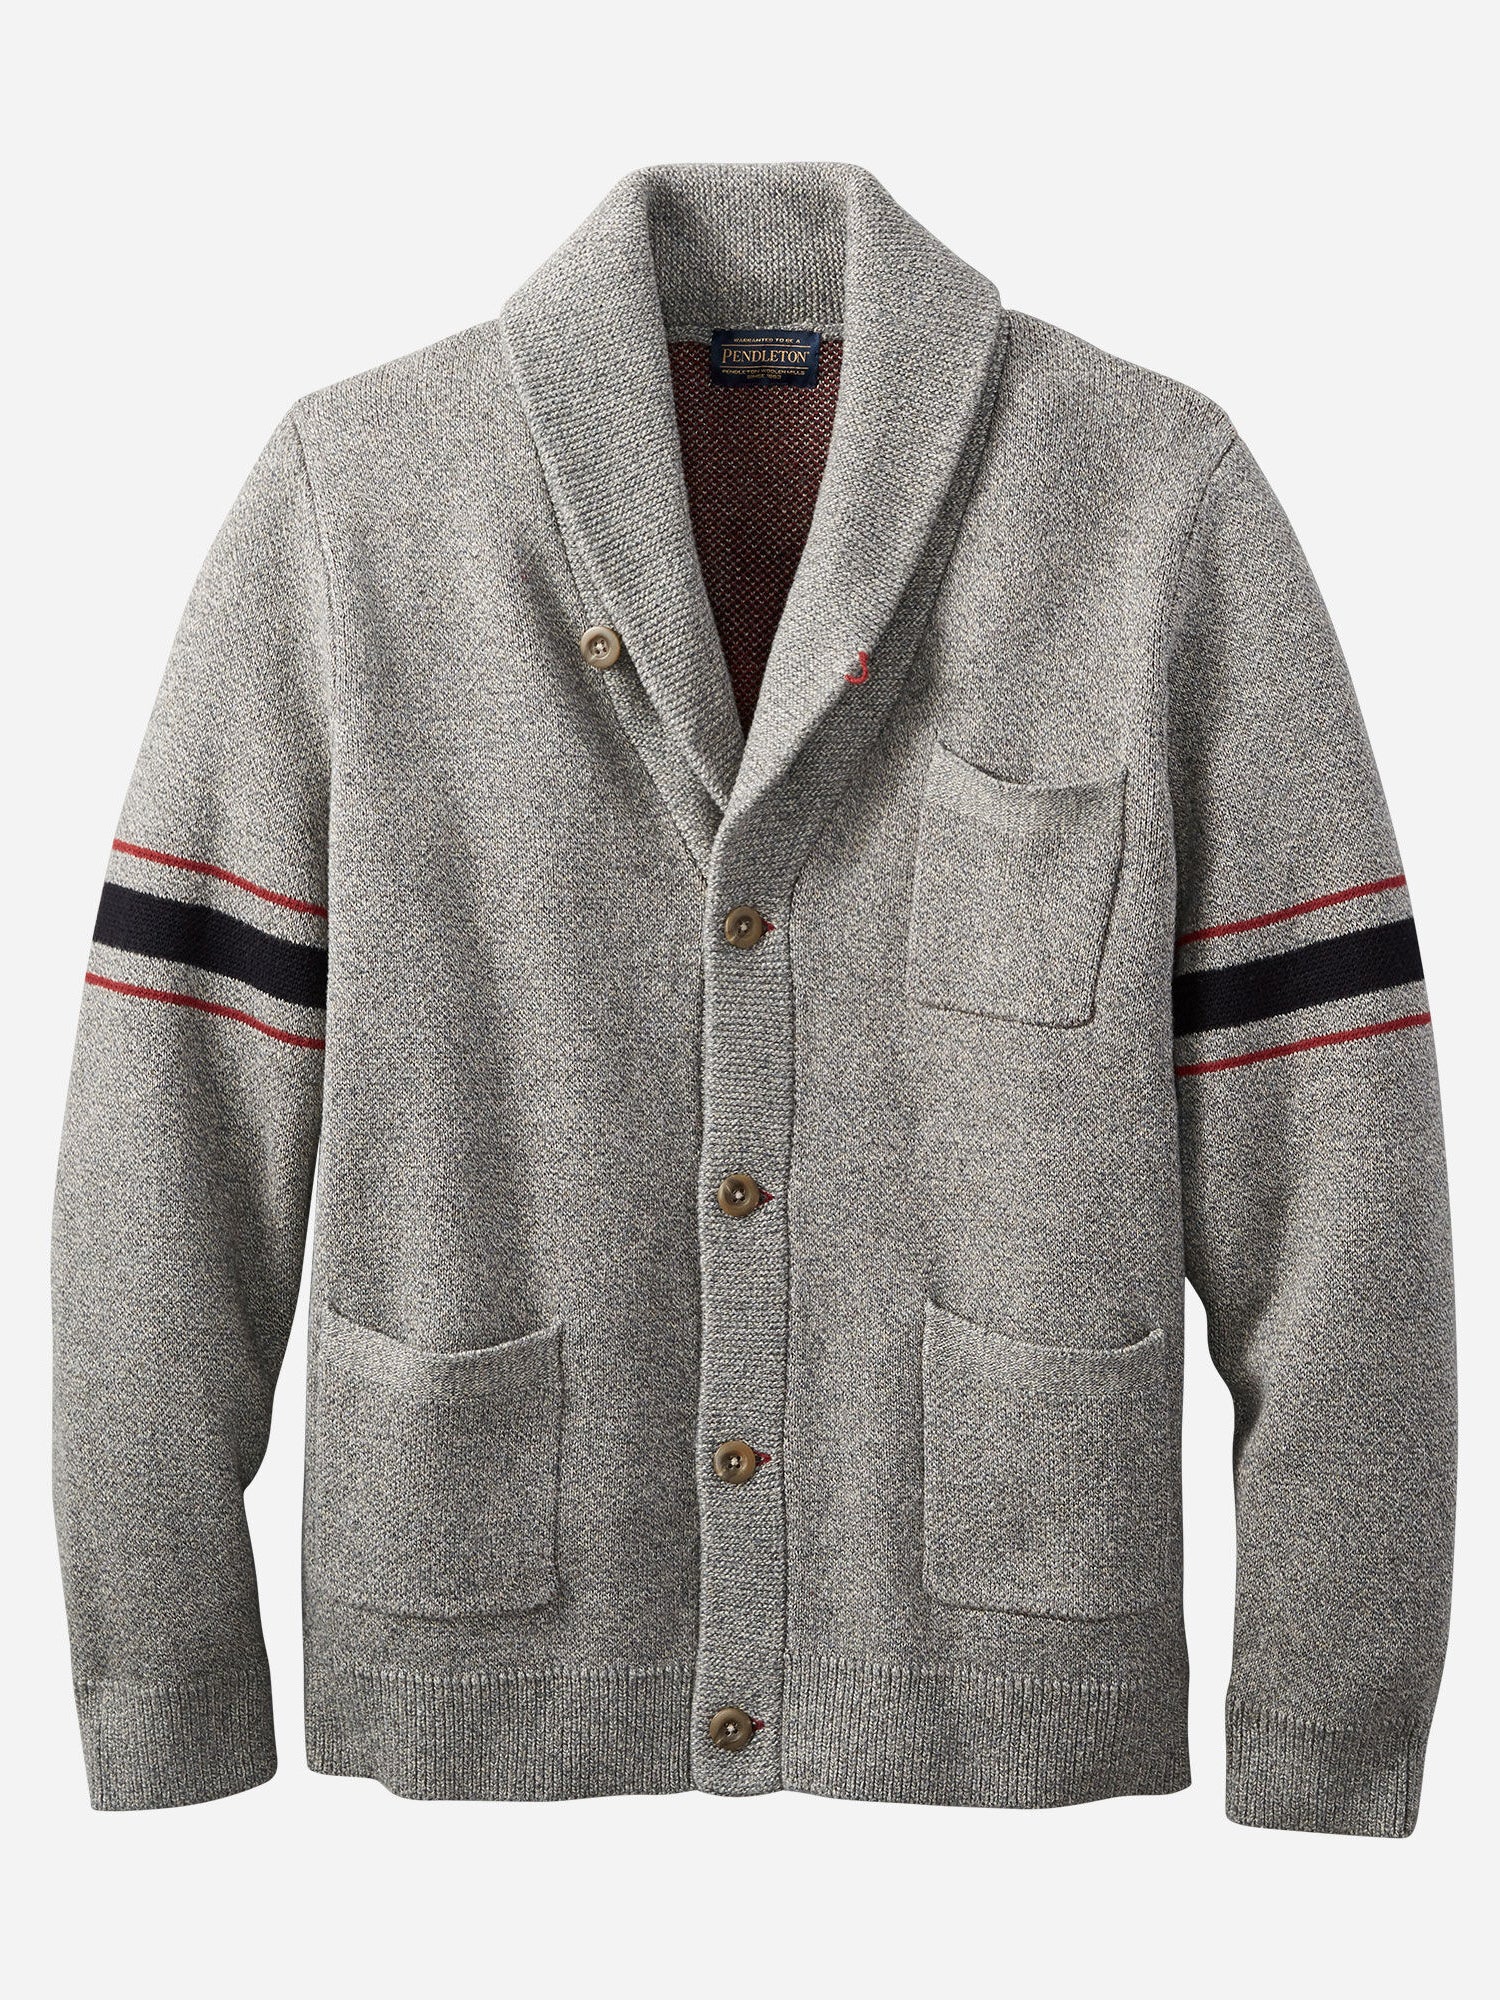 Pendleton Archive 100% Cotton Cardigan in Grey